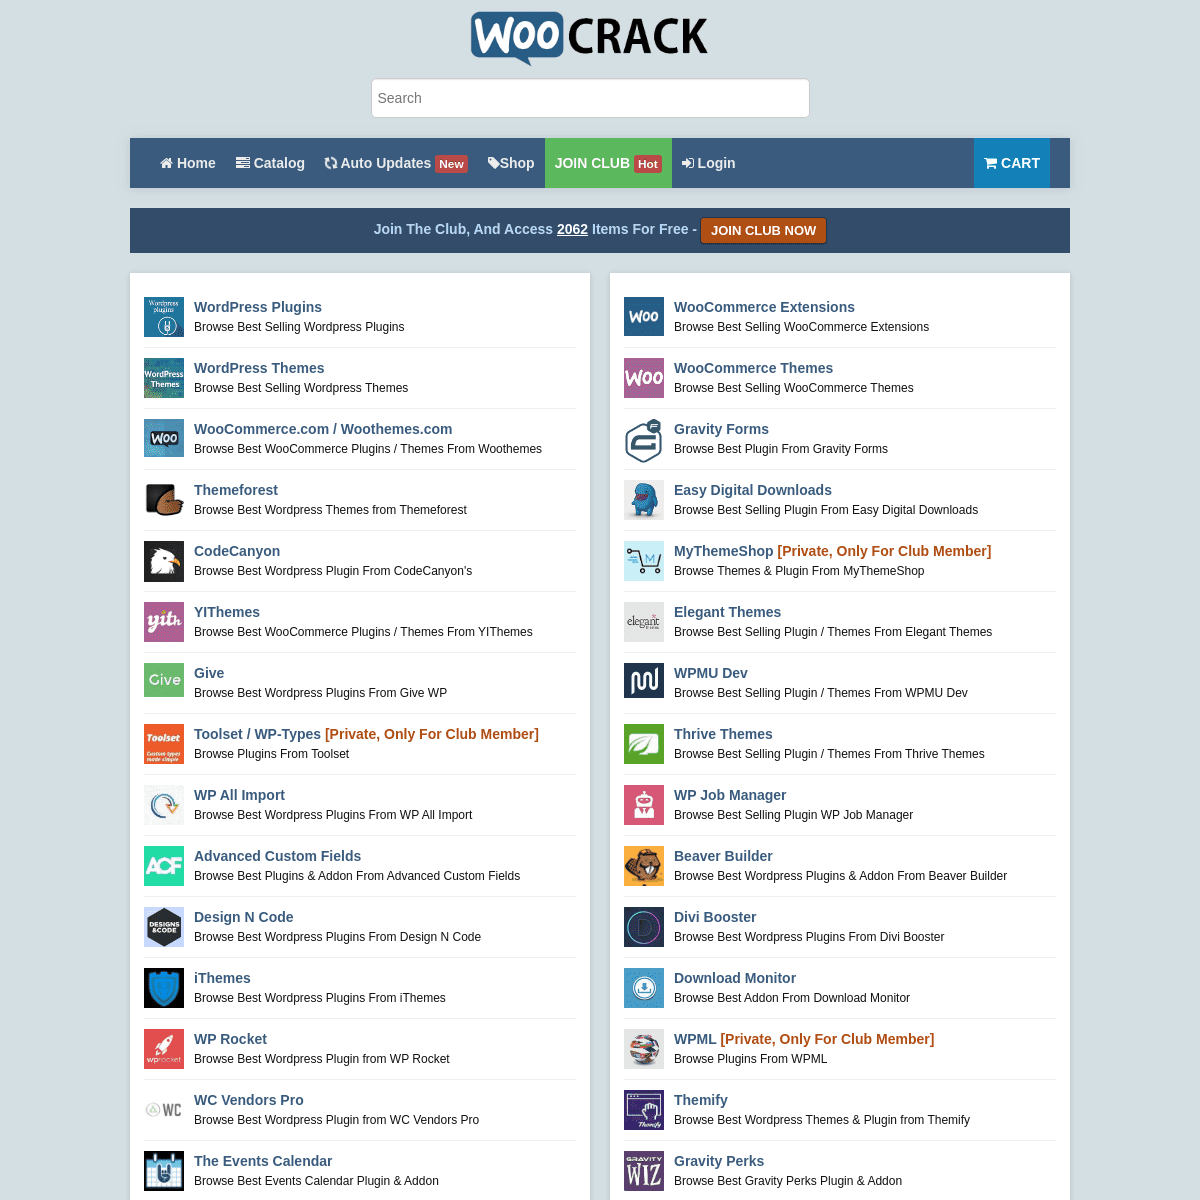 A complete backup of woocrack.com